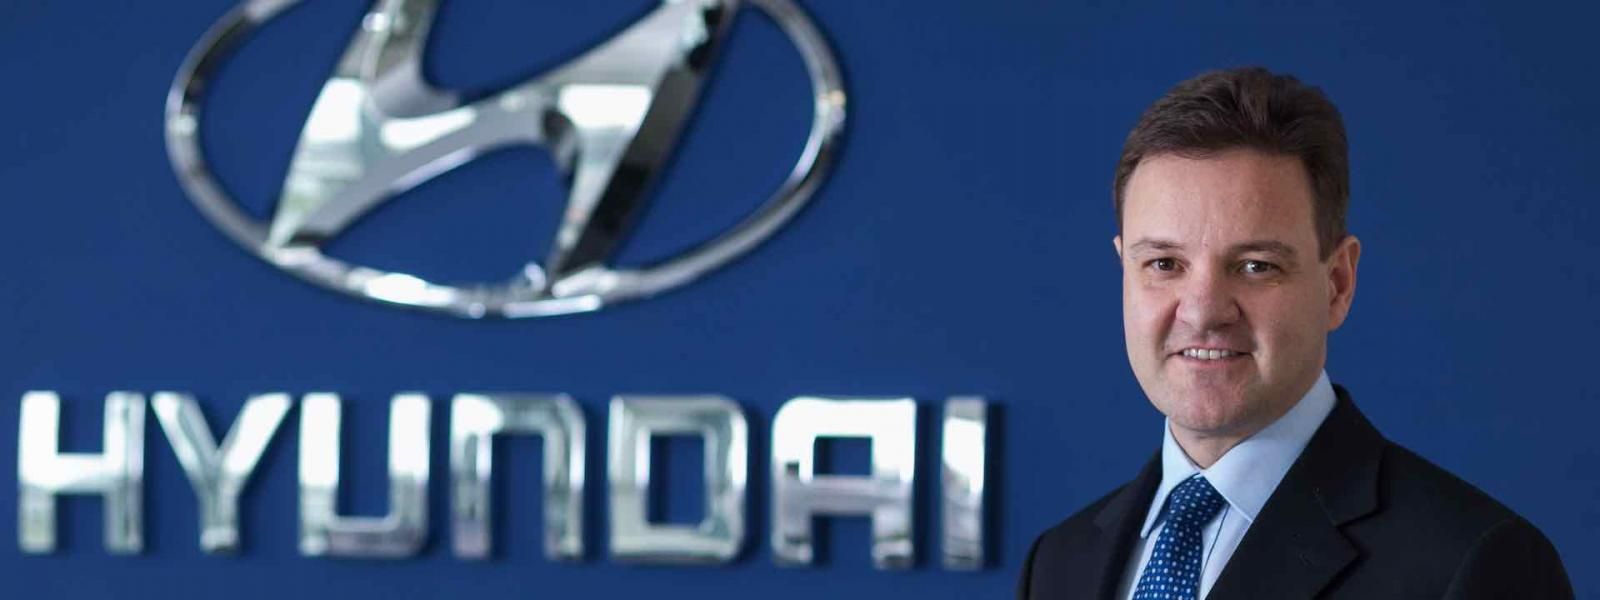 Andrea_Crespi - Presidente Hyundai Italia